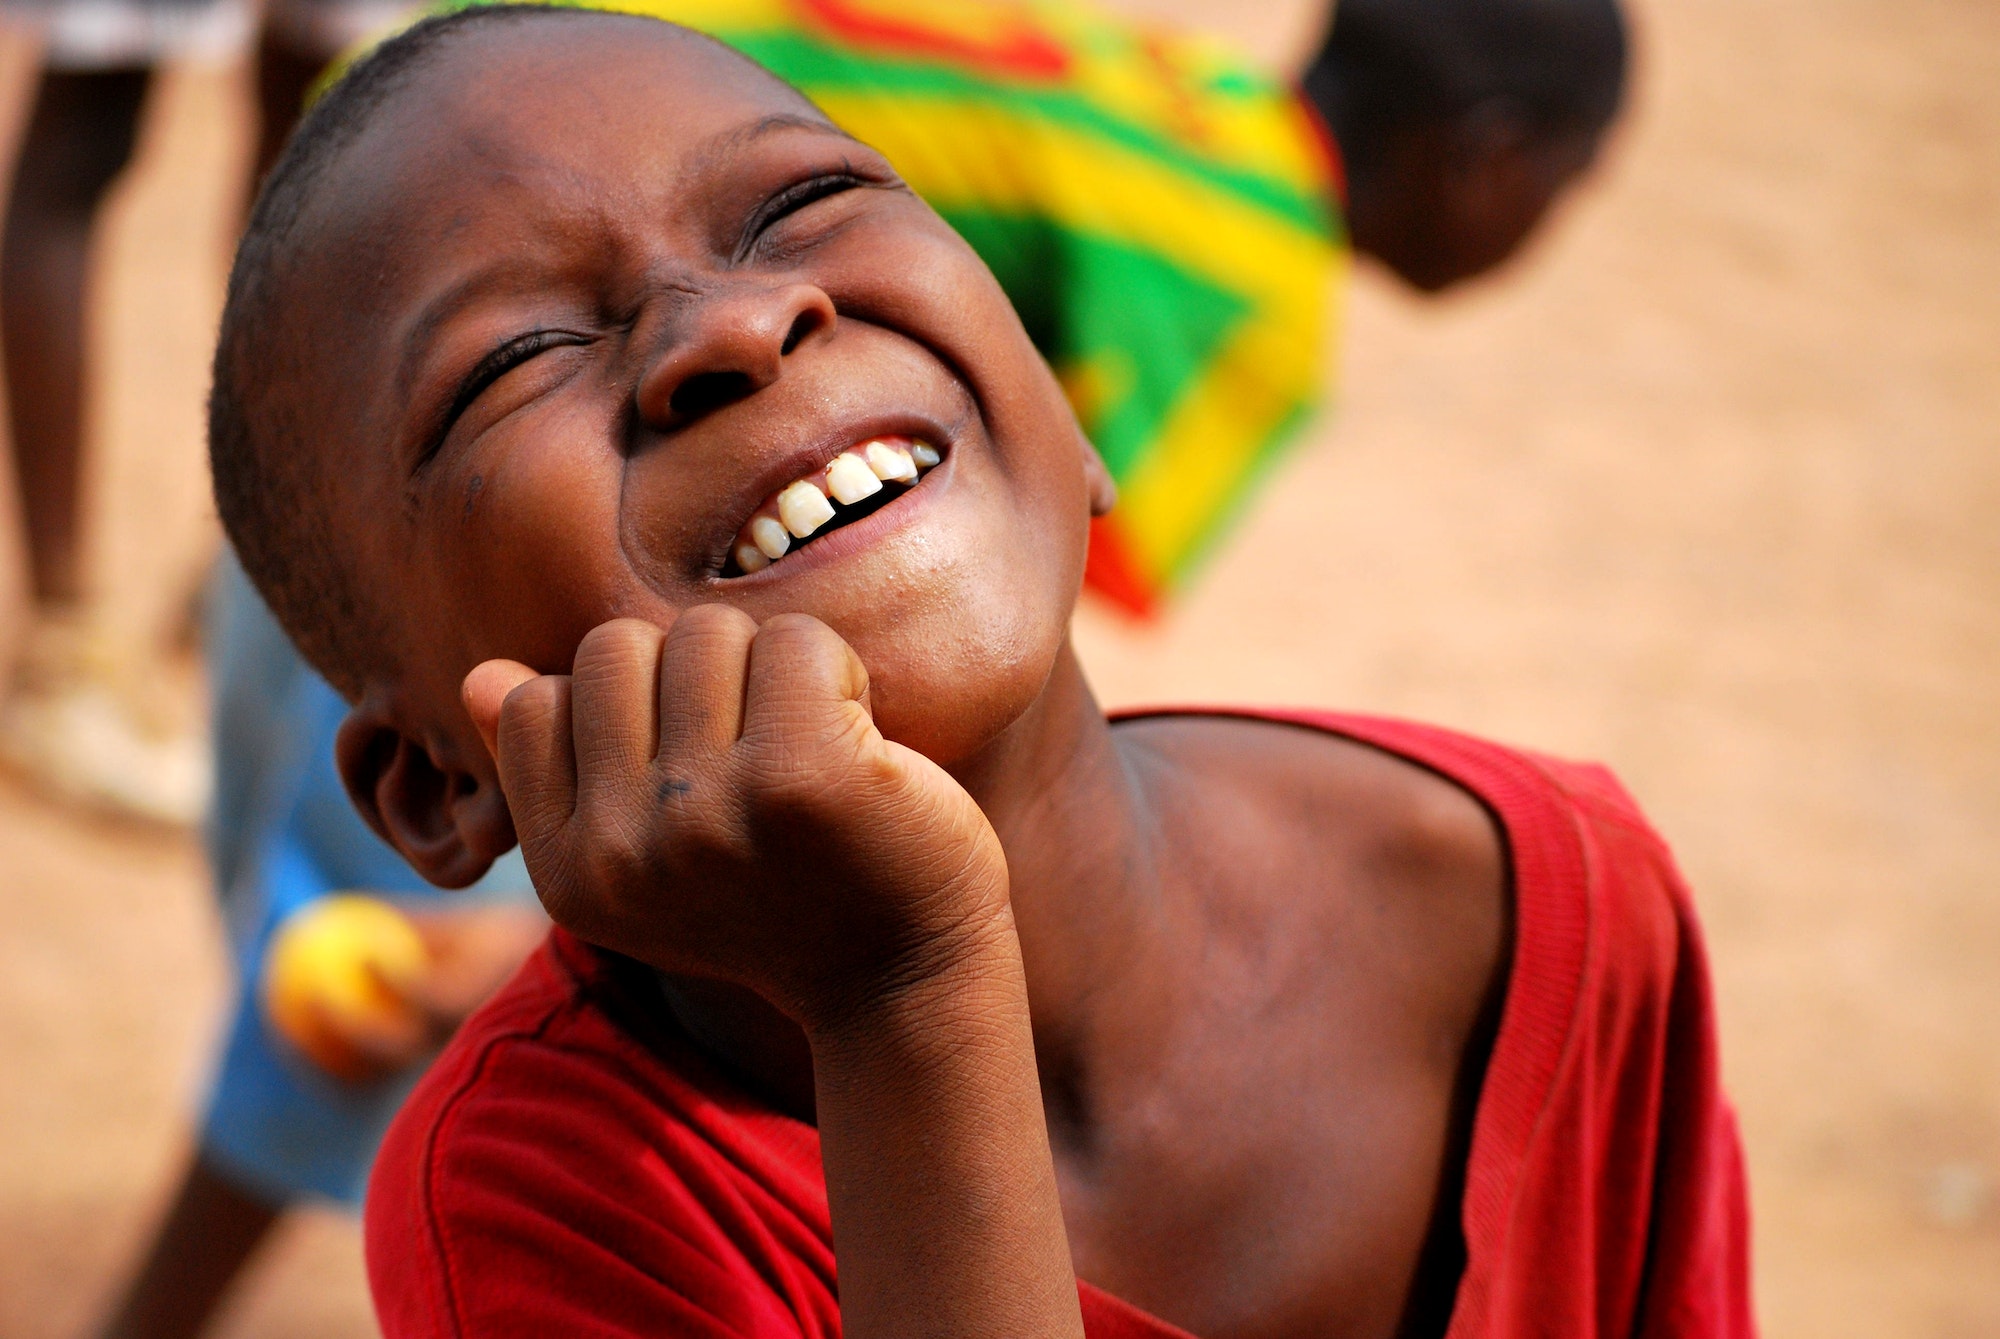 African boy (street child) smiling - africa volunteering emotion innocence joy